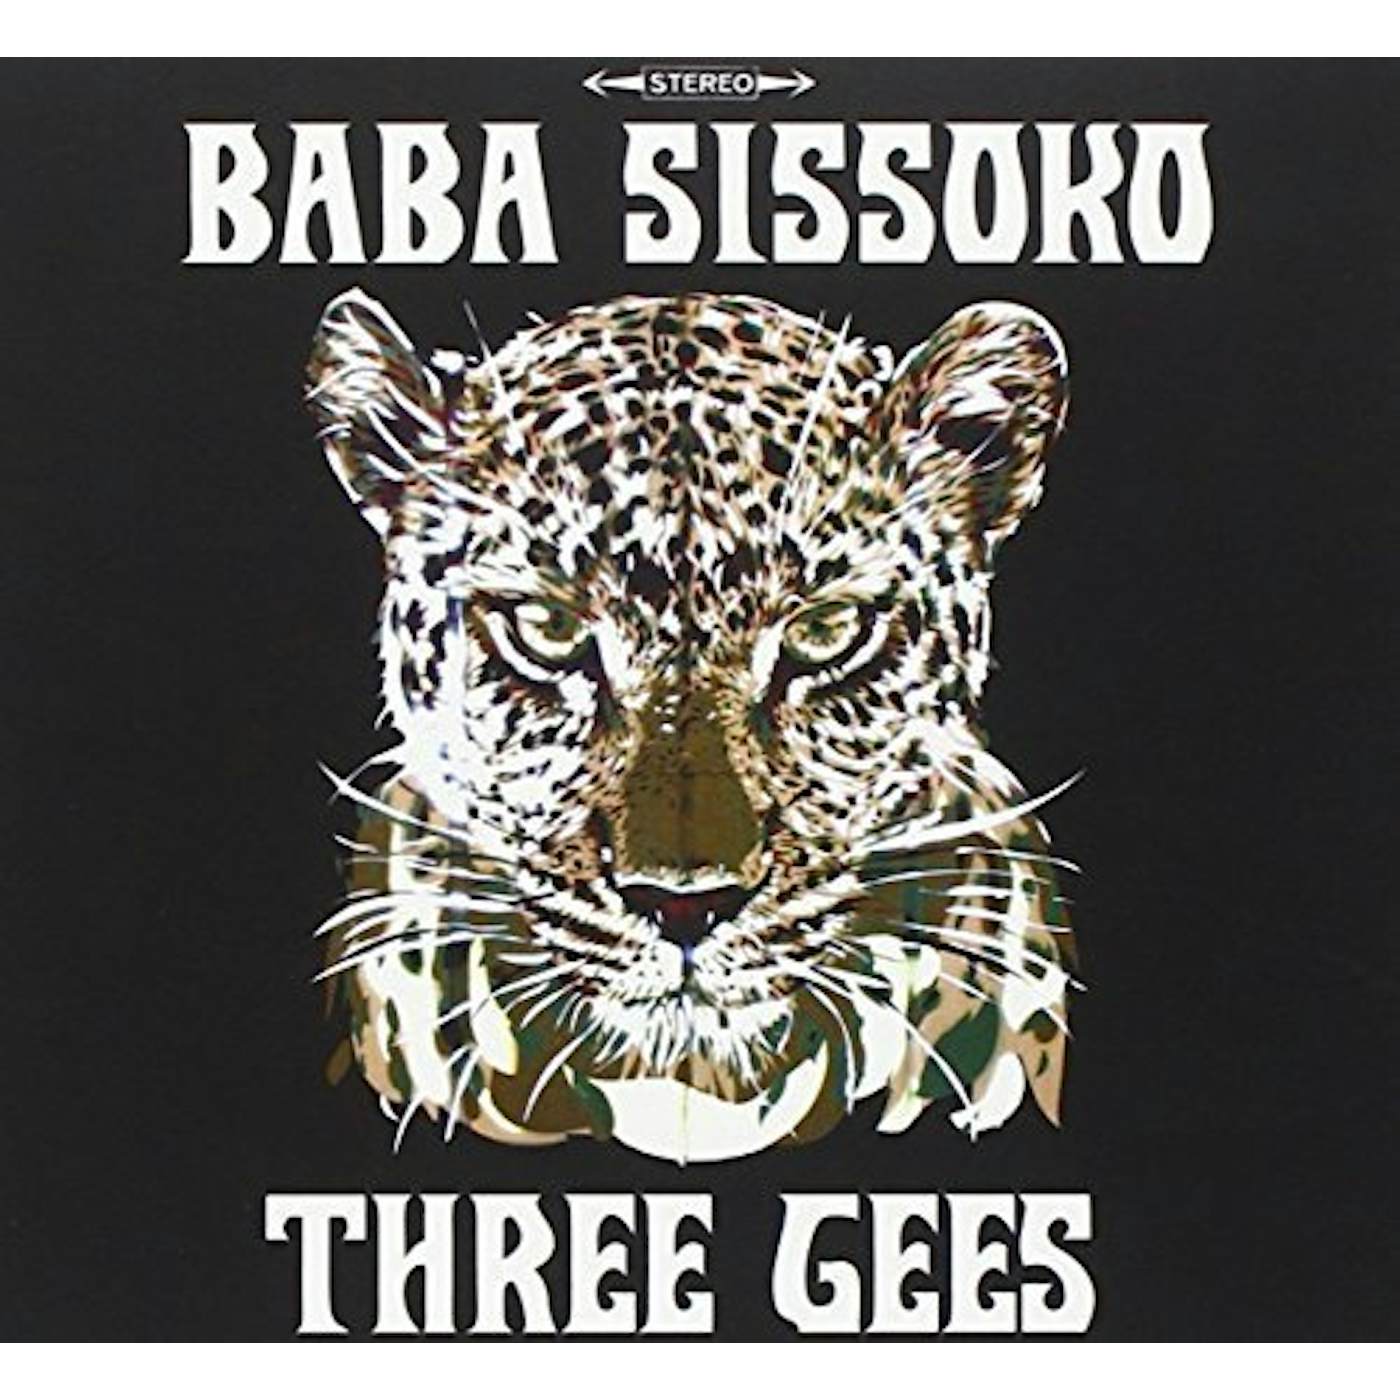 Baba Sissoko THREE GEES CD